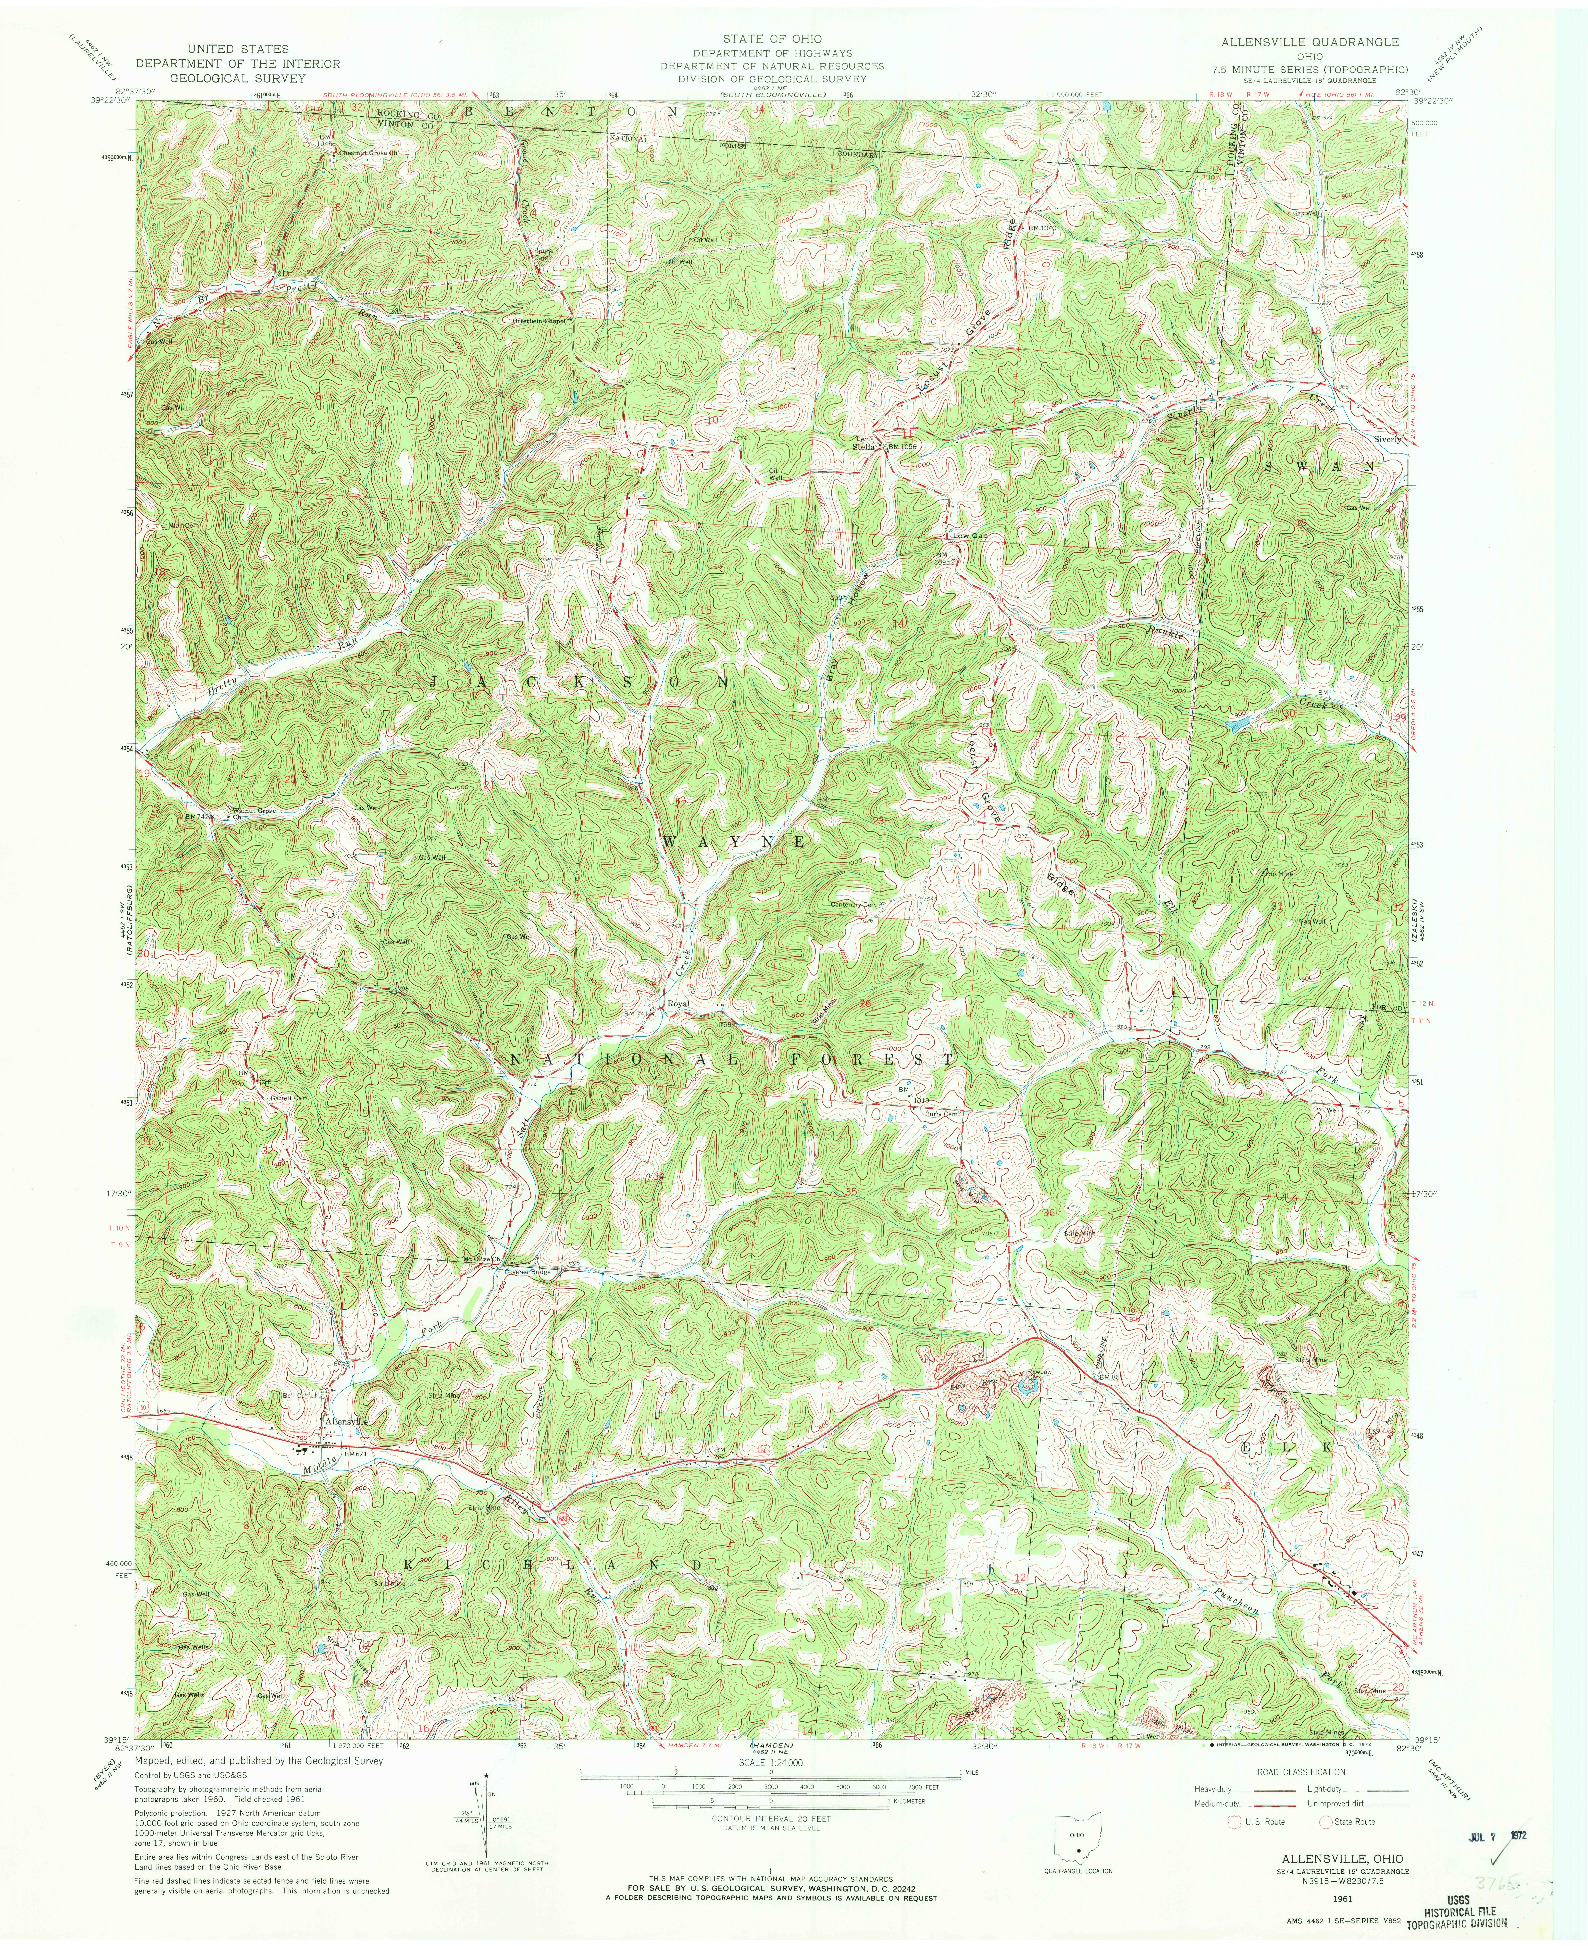 USGS 1:24000-SCALE QUADRANGLE FOR ALLENSVILLE, OH 1961